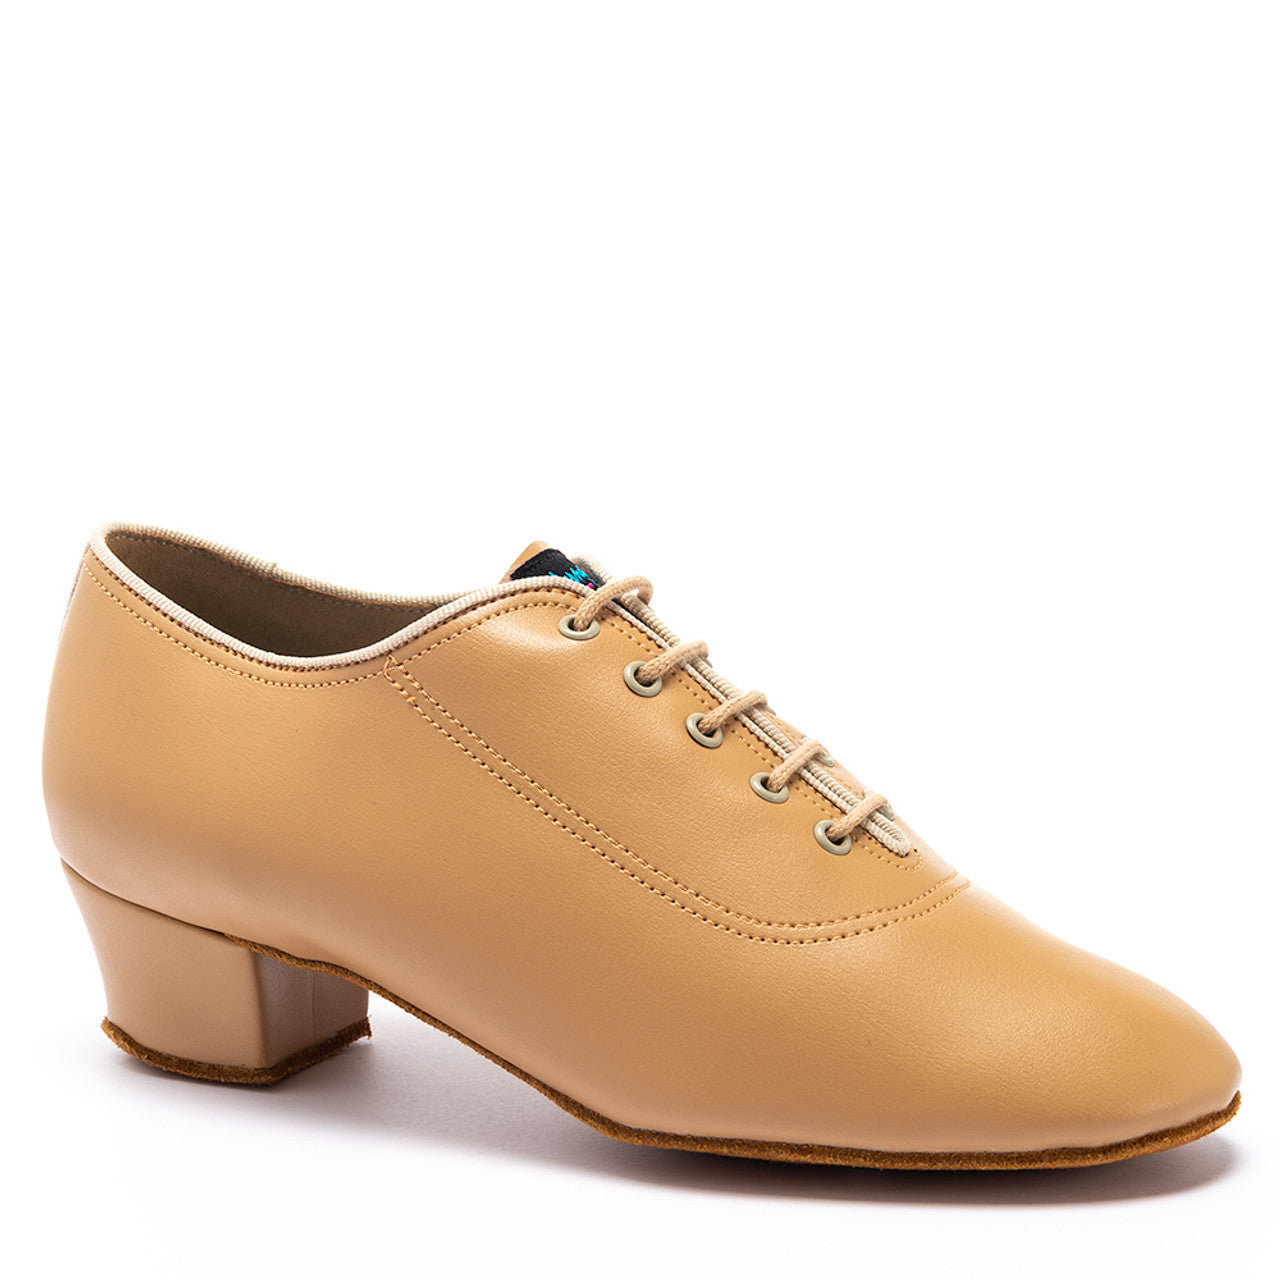 International Dance Shoes, Heather (Split-Sole), Beige, 1.5” Heel